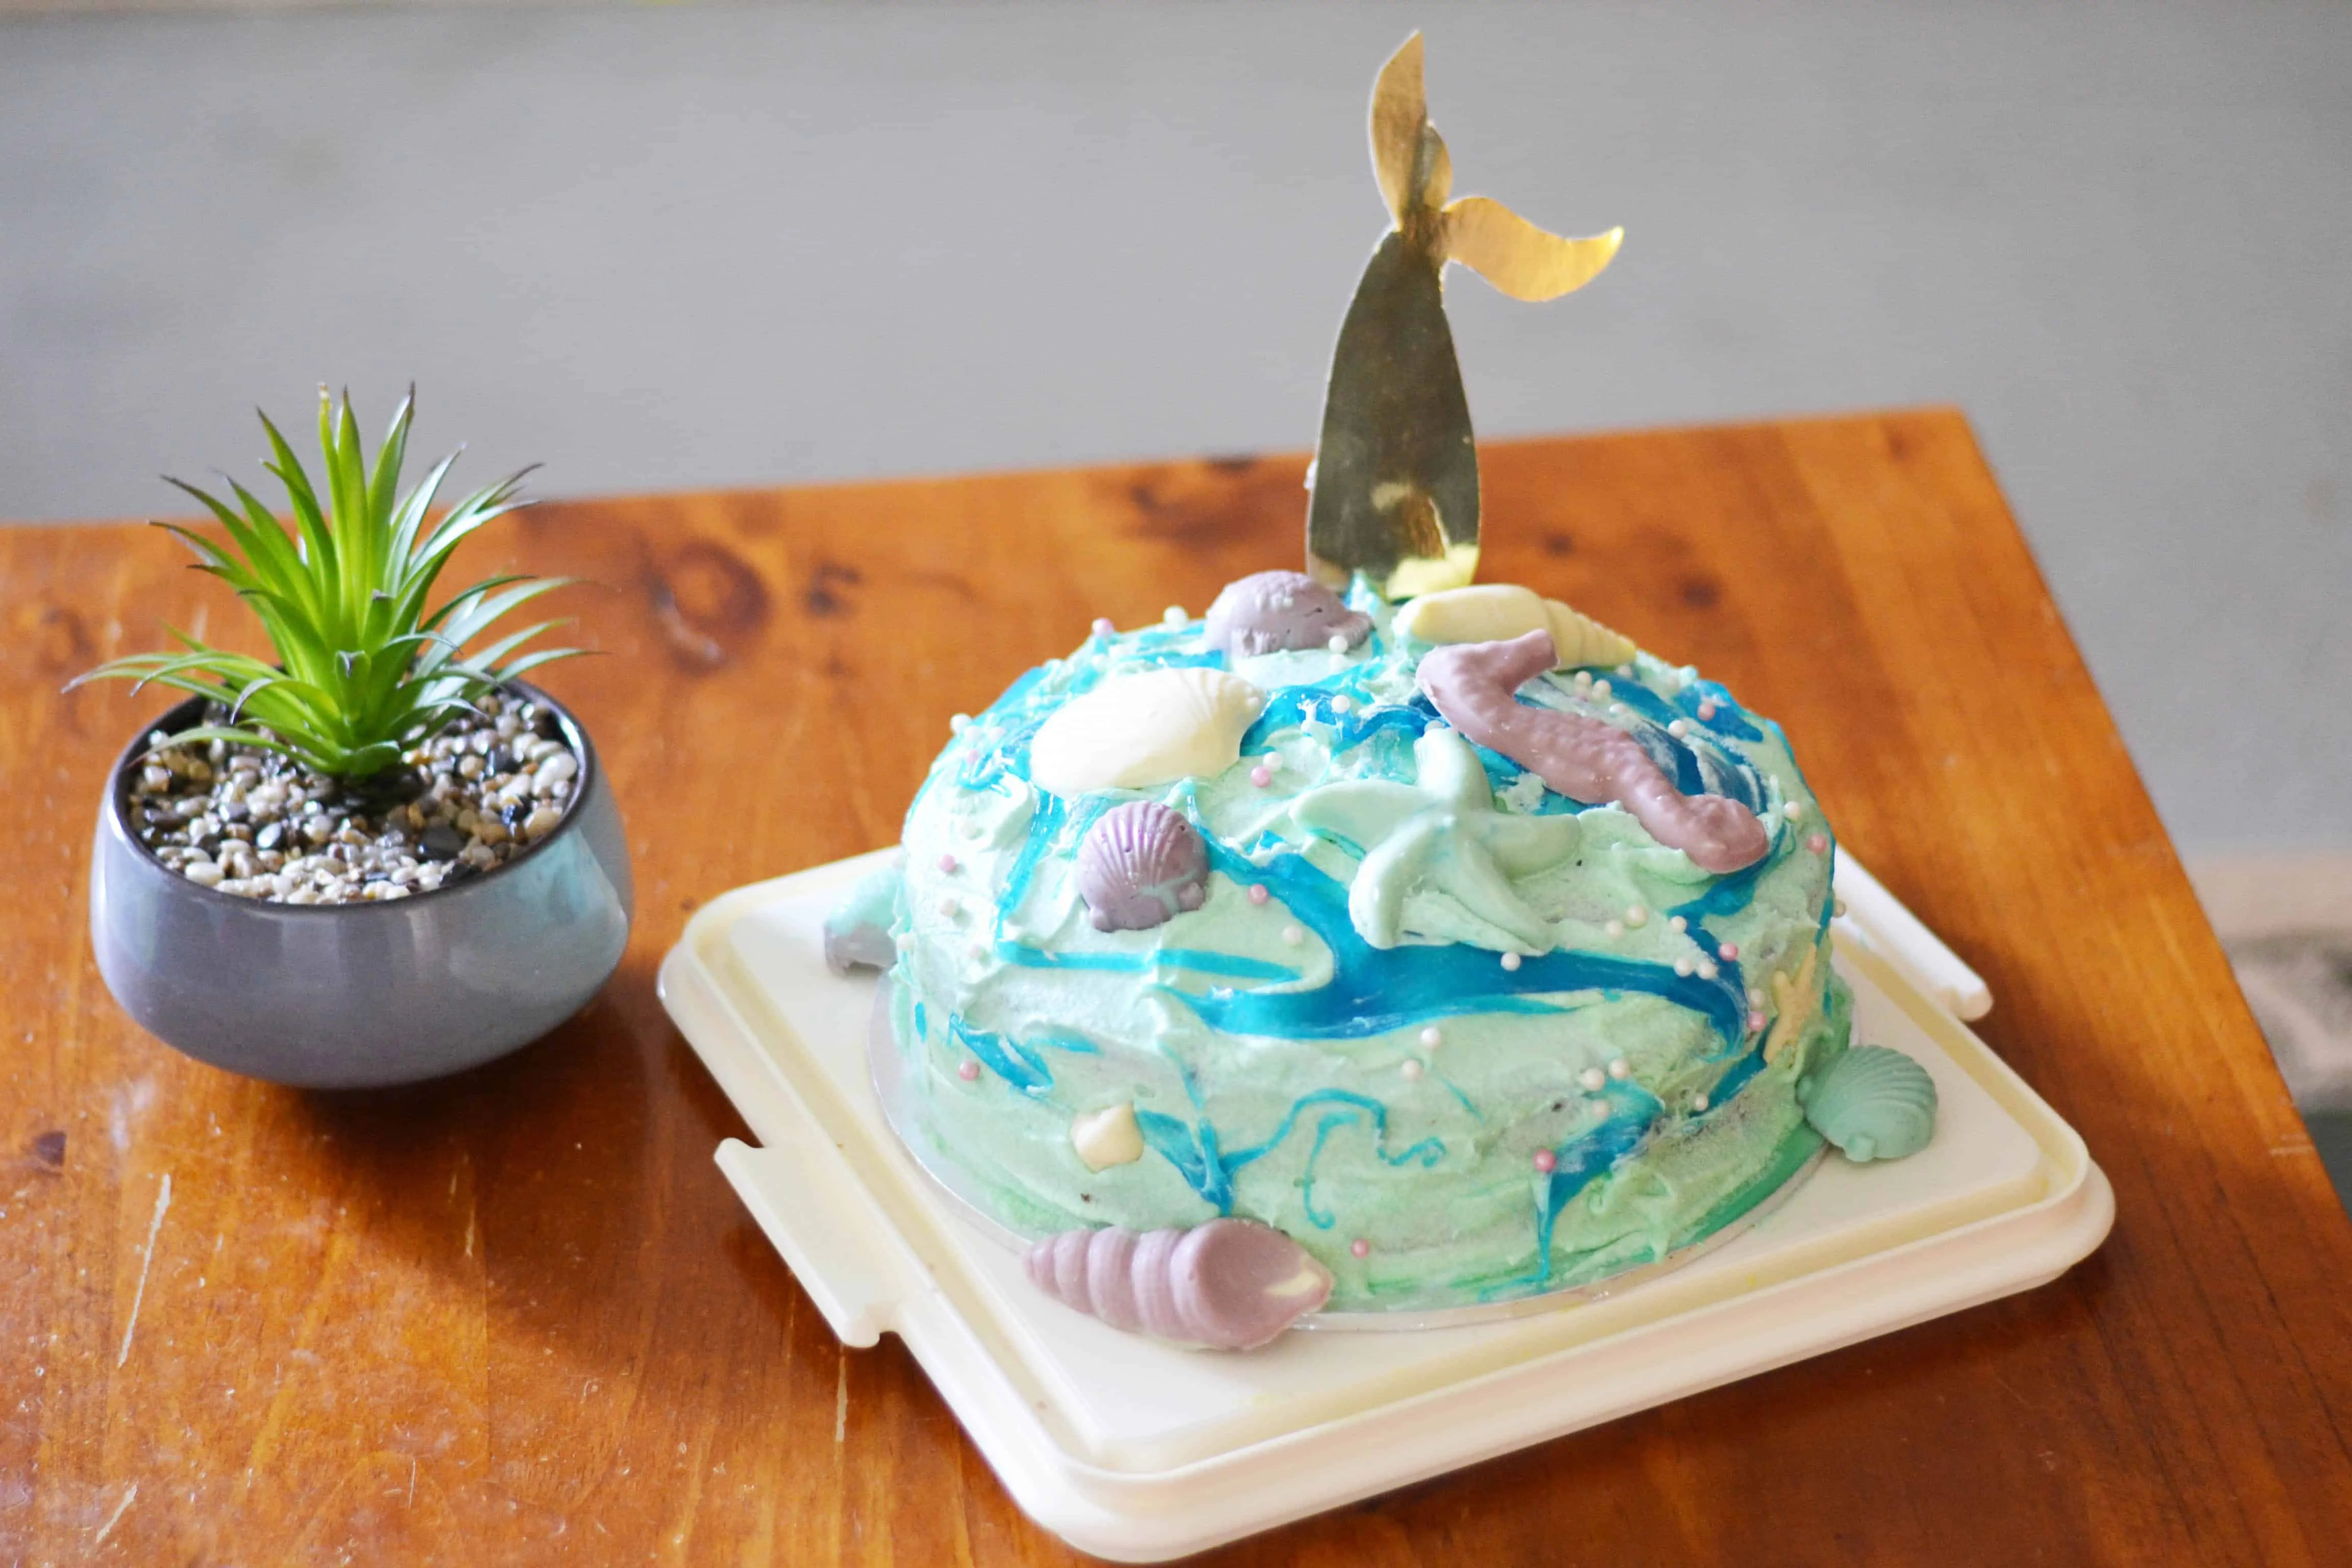 How to make a simple diy mermaid cake